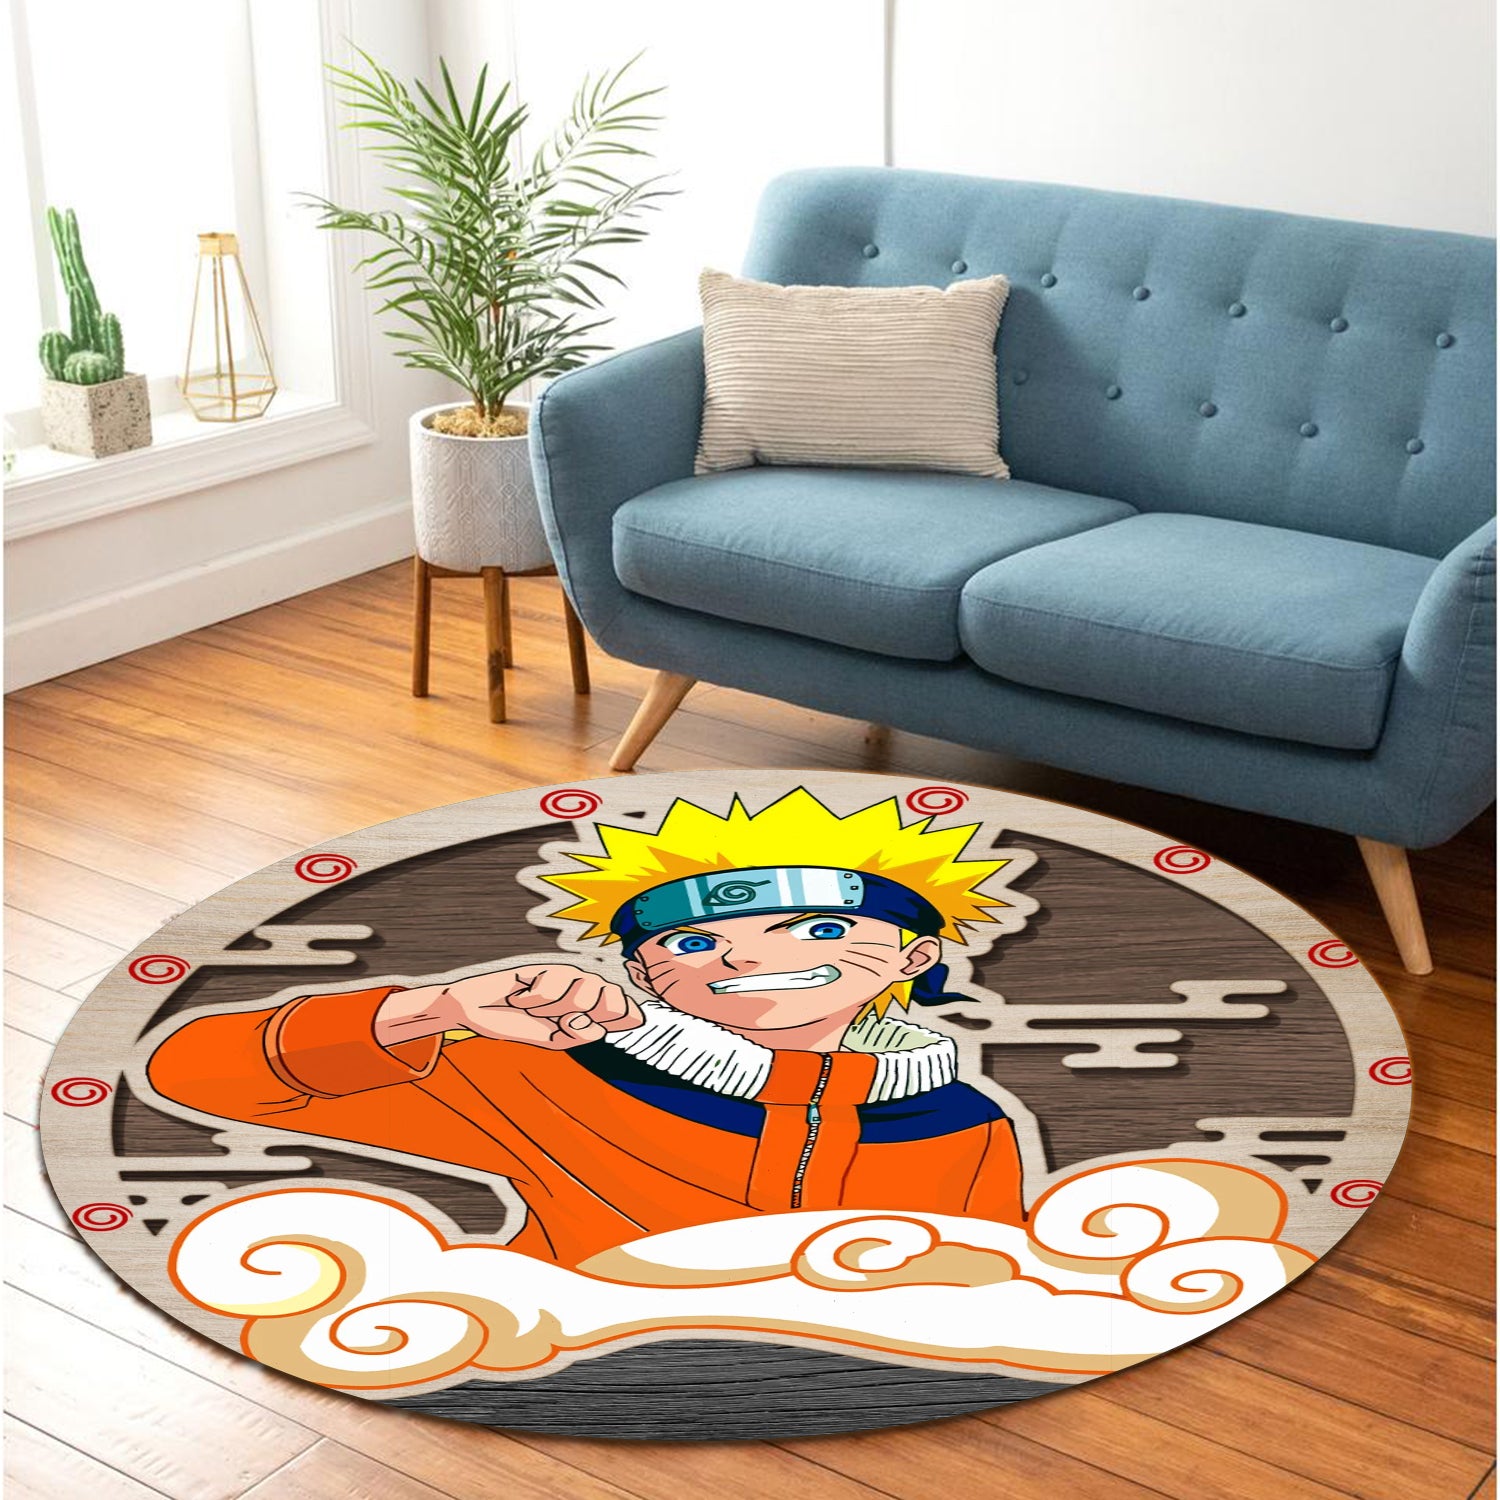 Naruto Round Carpet Rug Bedroom Livingroom Home Decor Nearkii